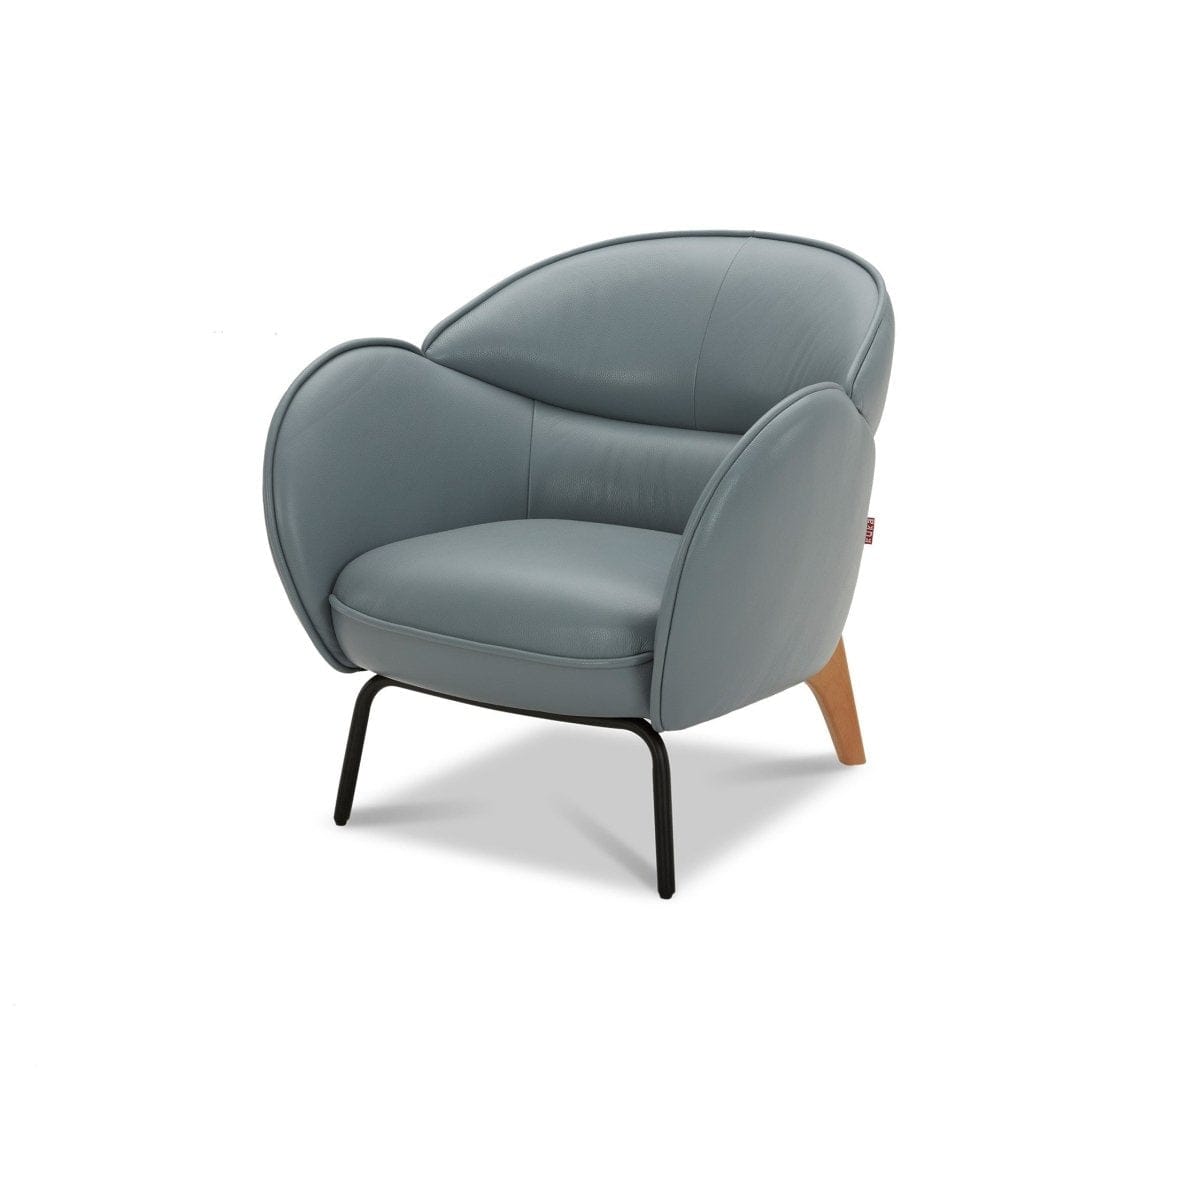 KUKA #KF.A065 Leather Lounge Chair (I) picket and rail